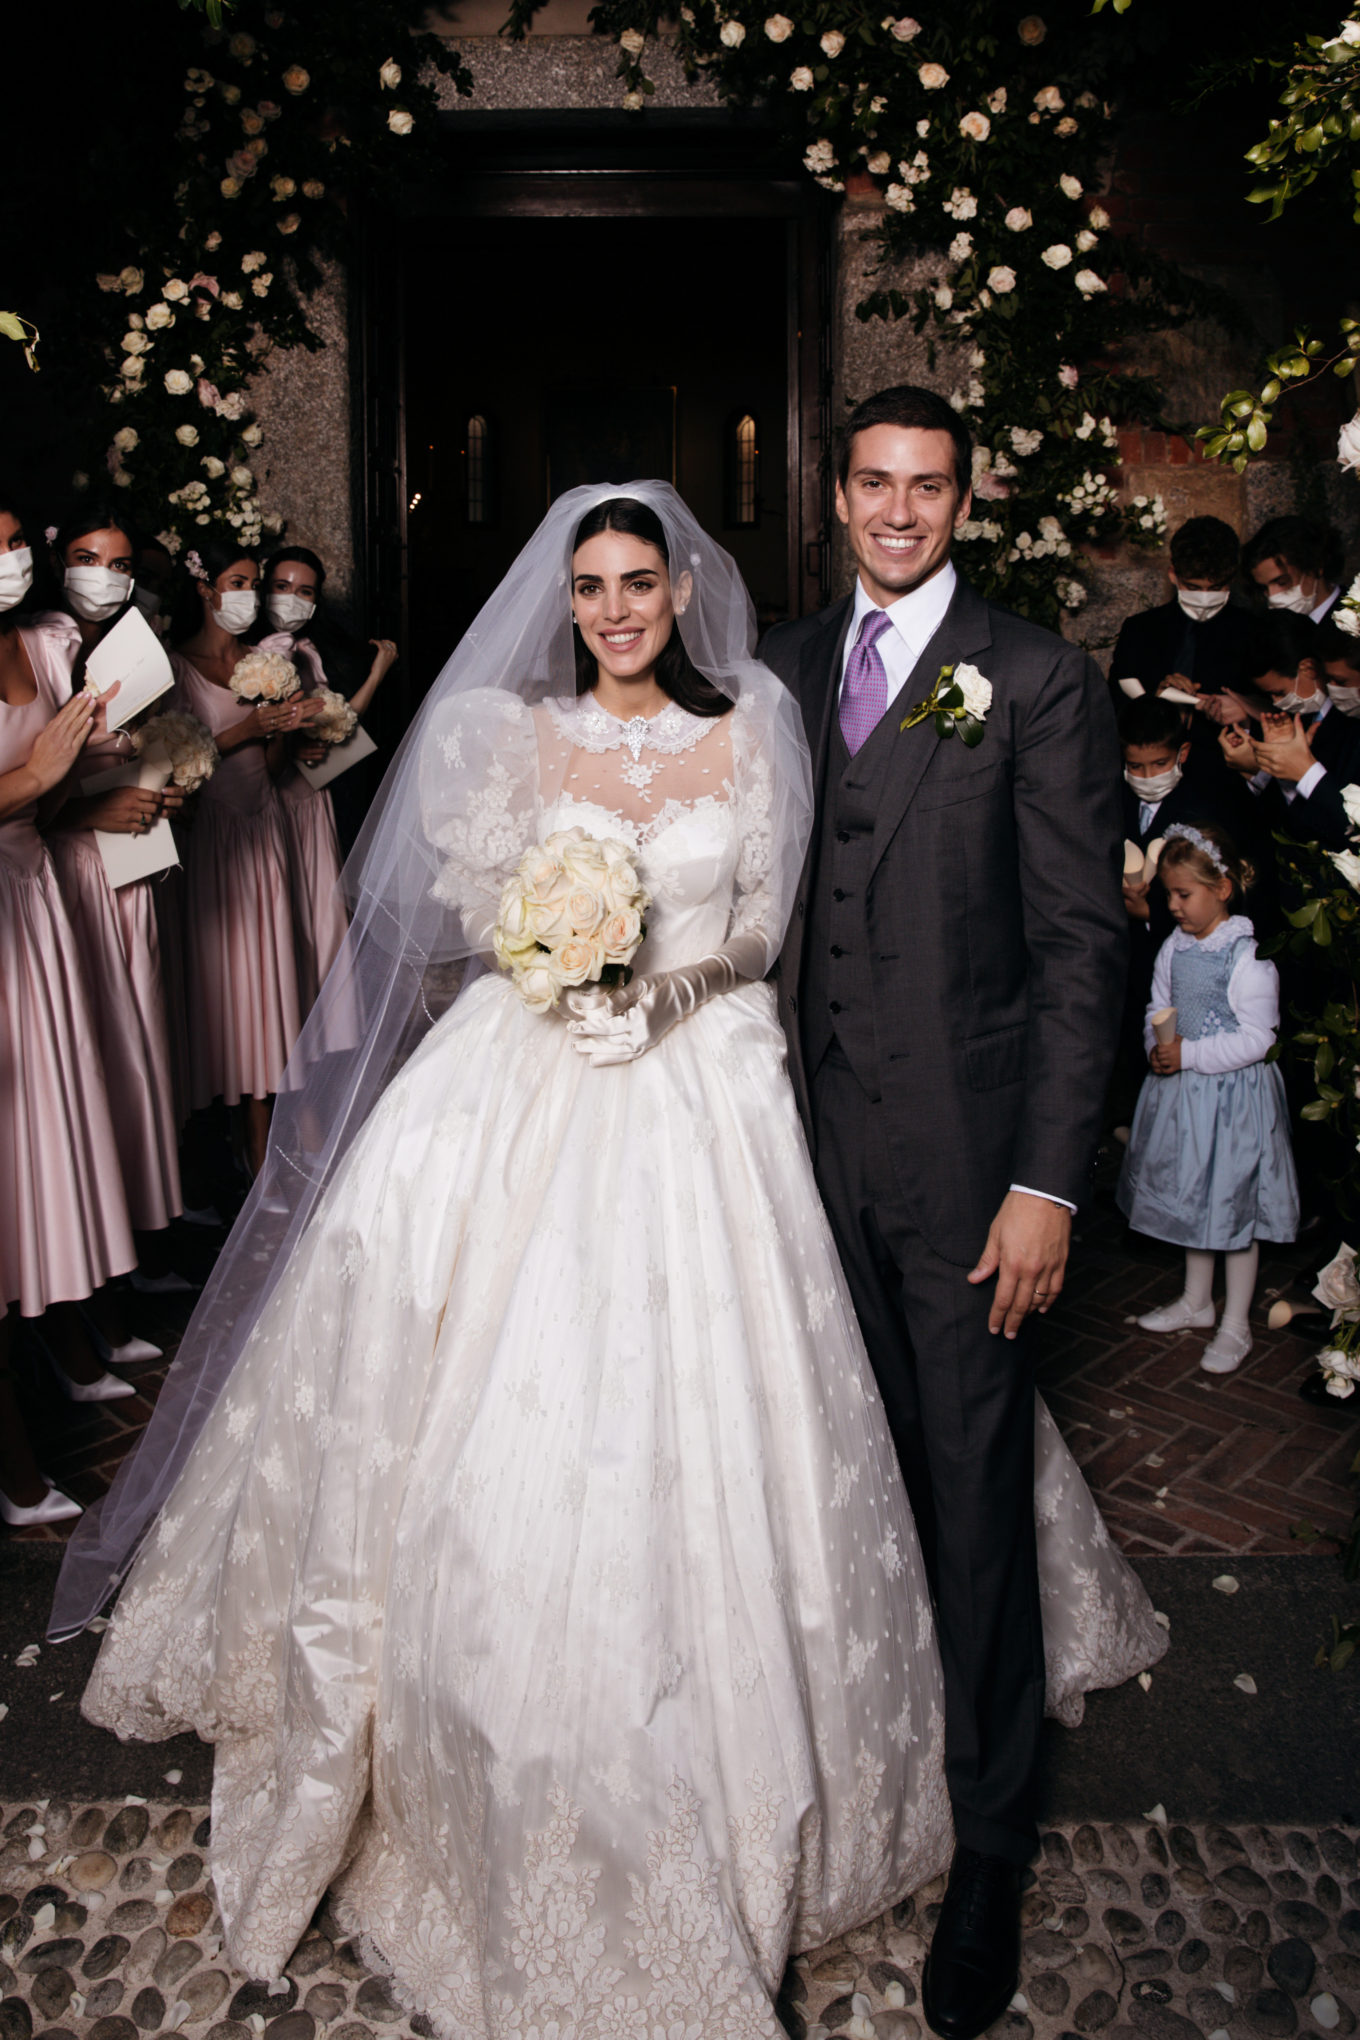 Wedding Day: младший сын Сильвио Берлускони Луиджи женился